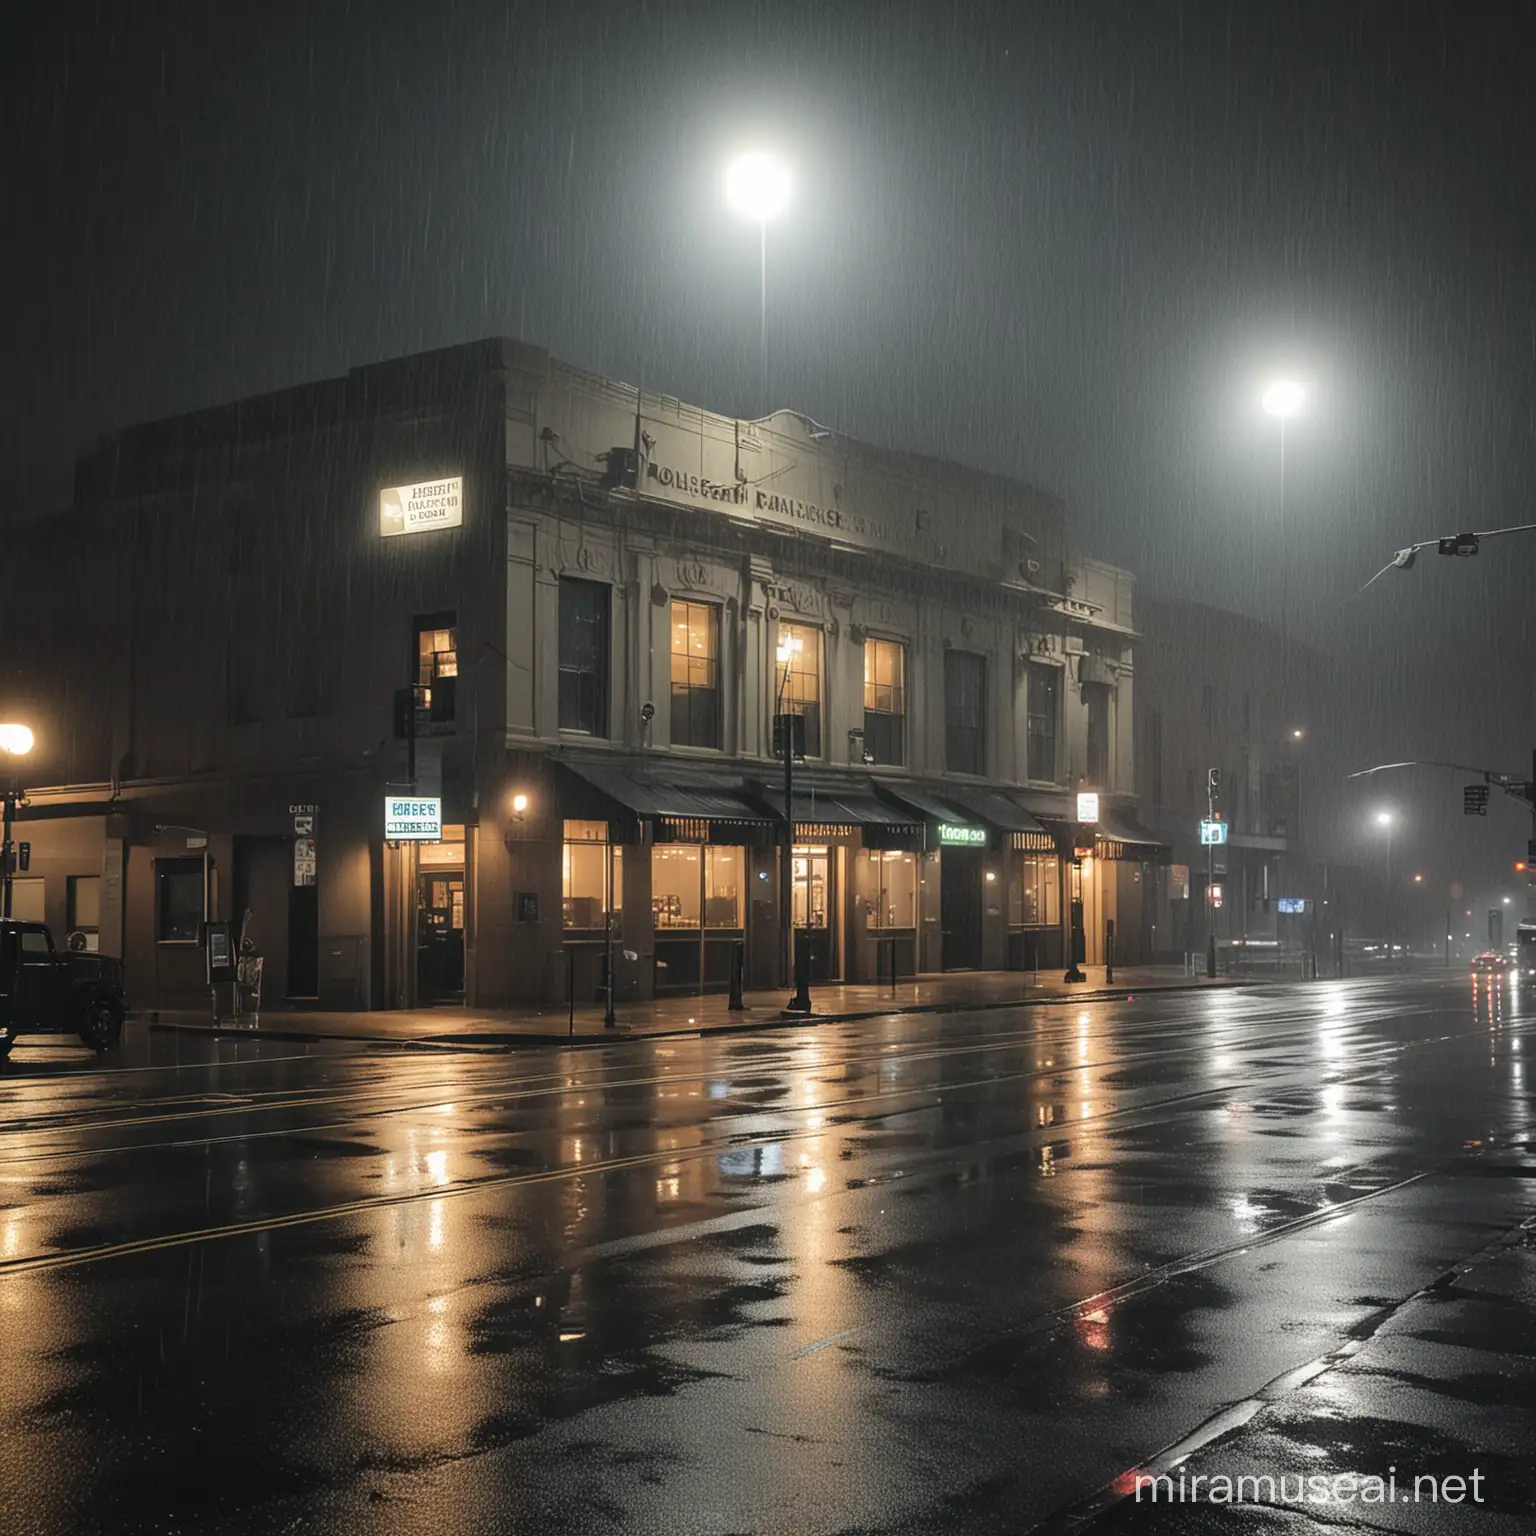 Urban Night Scene Club Building in Rainy Weather